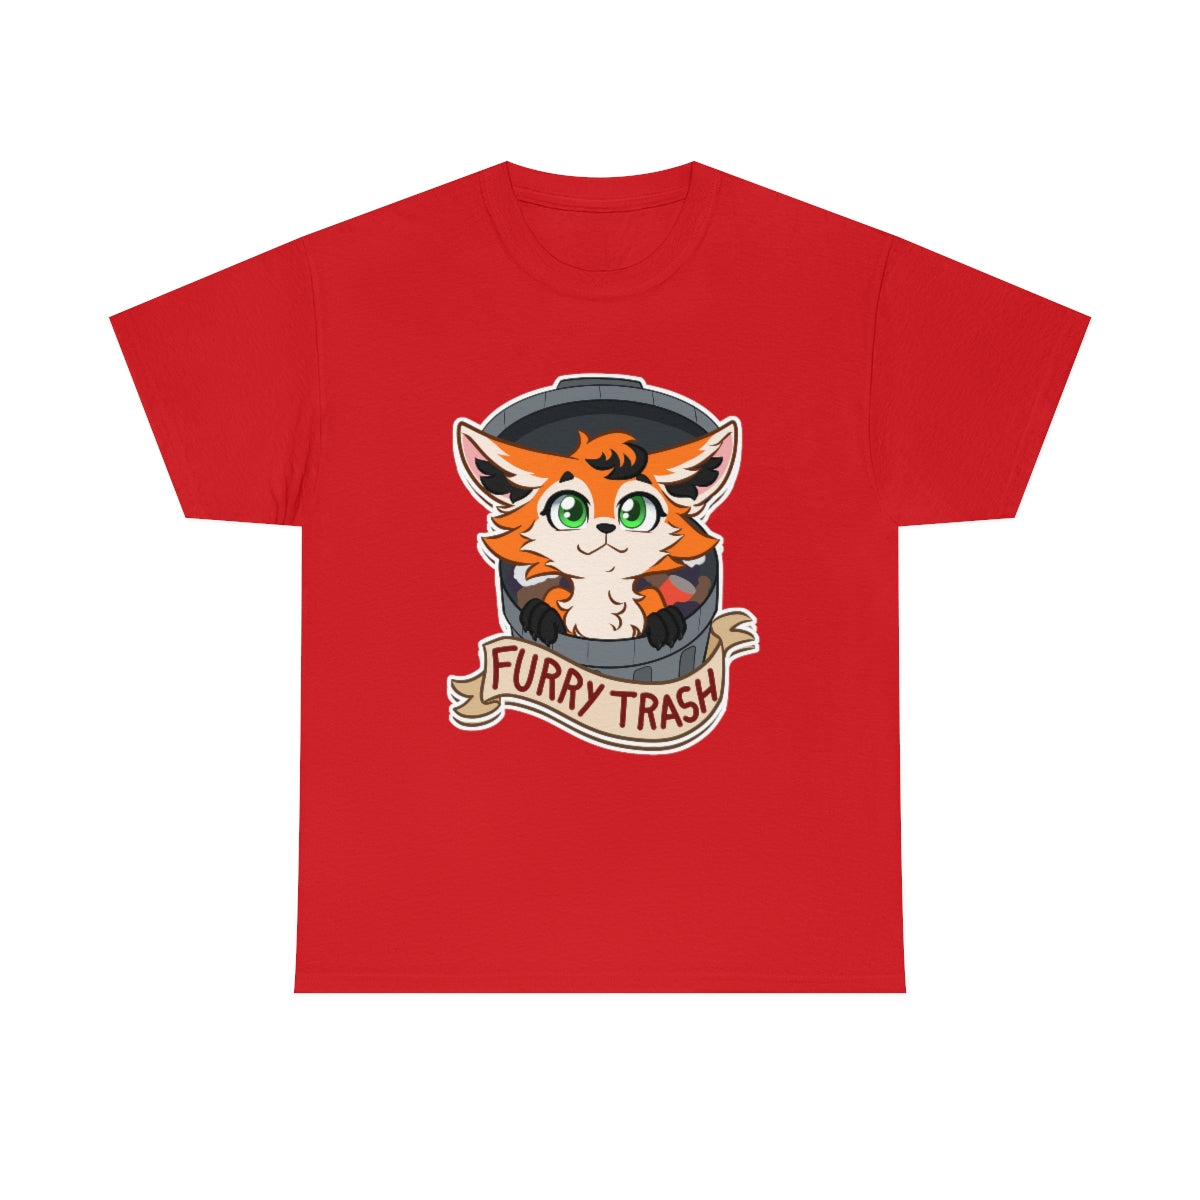 Furry Trash - T-Shirt T-Shirt Artworktee Red S 